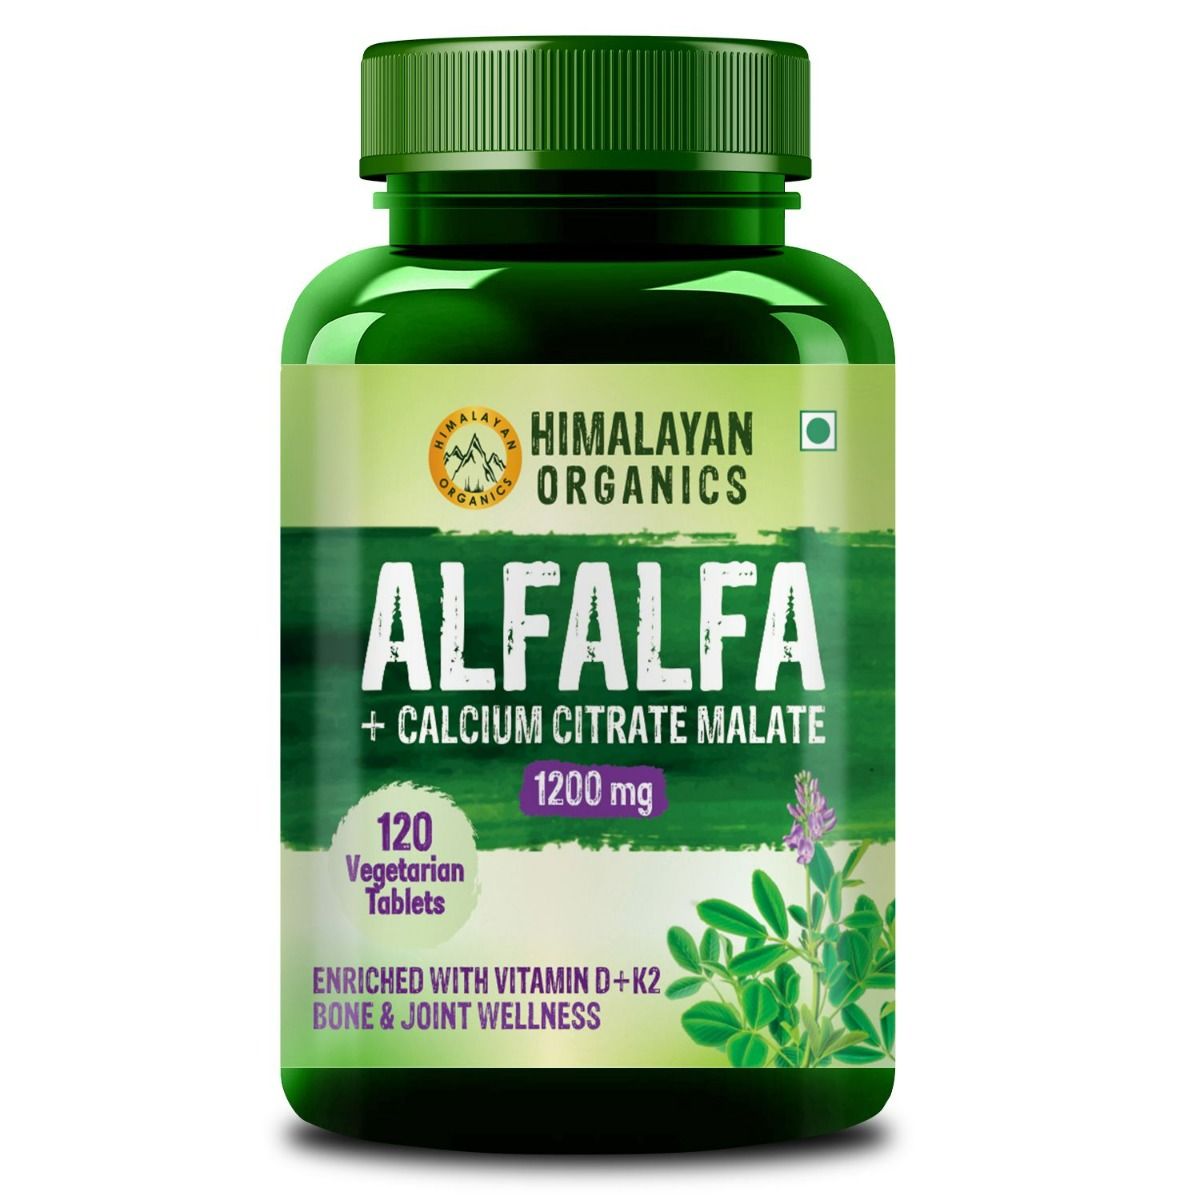 Buy Himalayan Organics Alfalfa Calcium Citrate Malate 1200mg, 120 Tablets Online